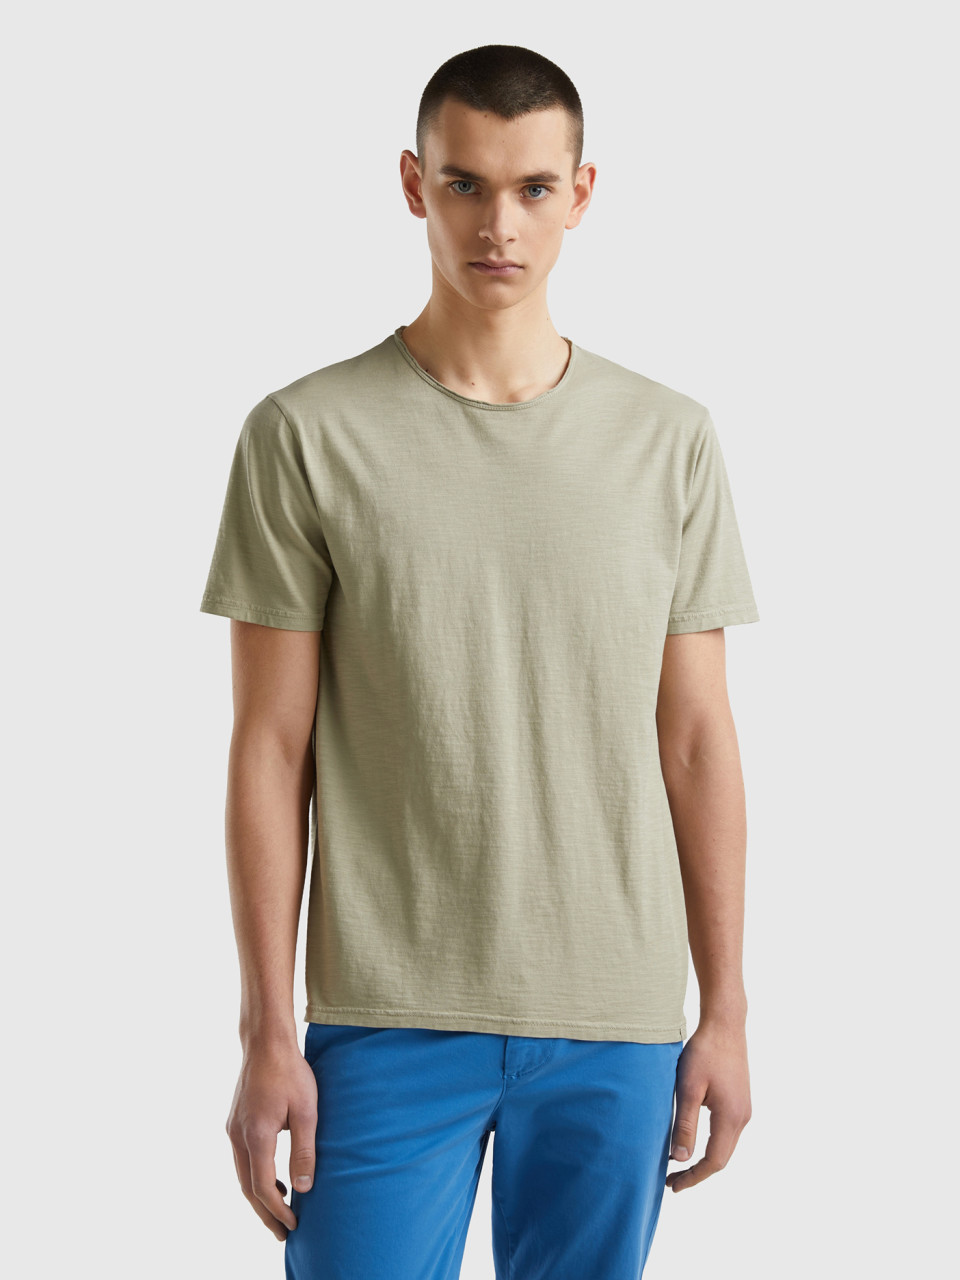 Benetton, Sage Green Slub Cotton T-shirt, Light Green, Men